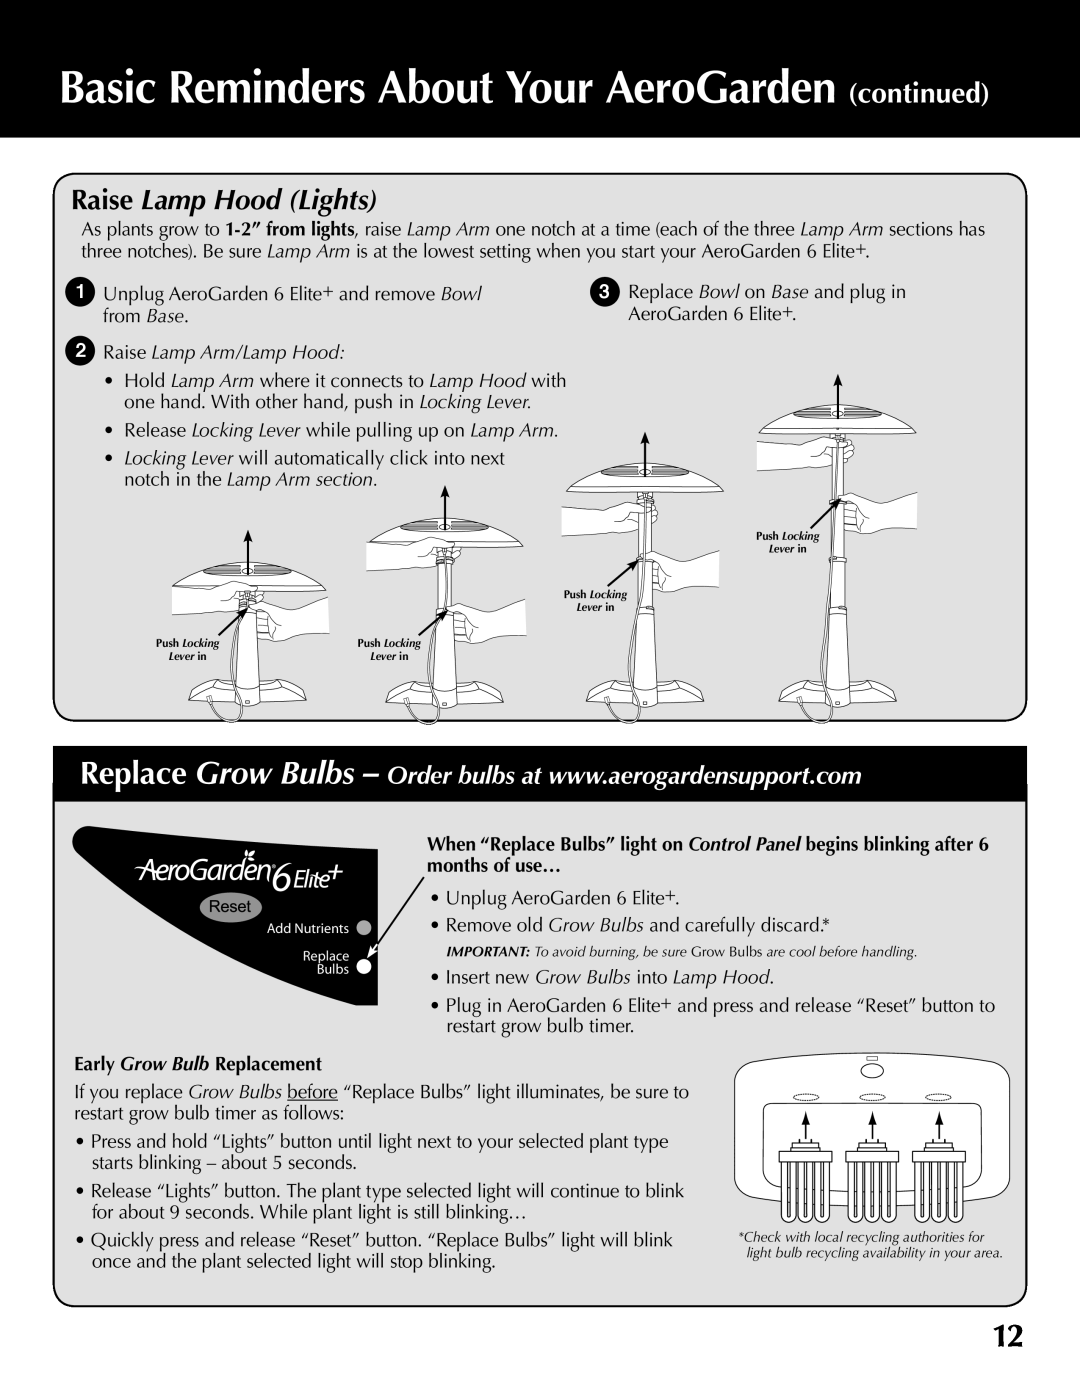 AeroGarden 200633 Basic Reminders About Your AeroGarden continued, Raise Lamp Hood Lights, Raise Lamp Arm/Lamp Hood 